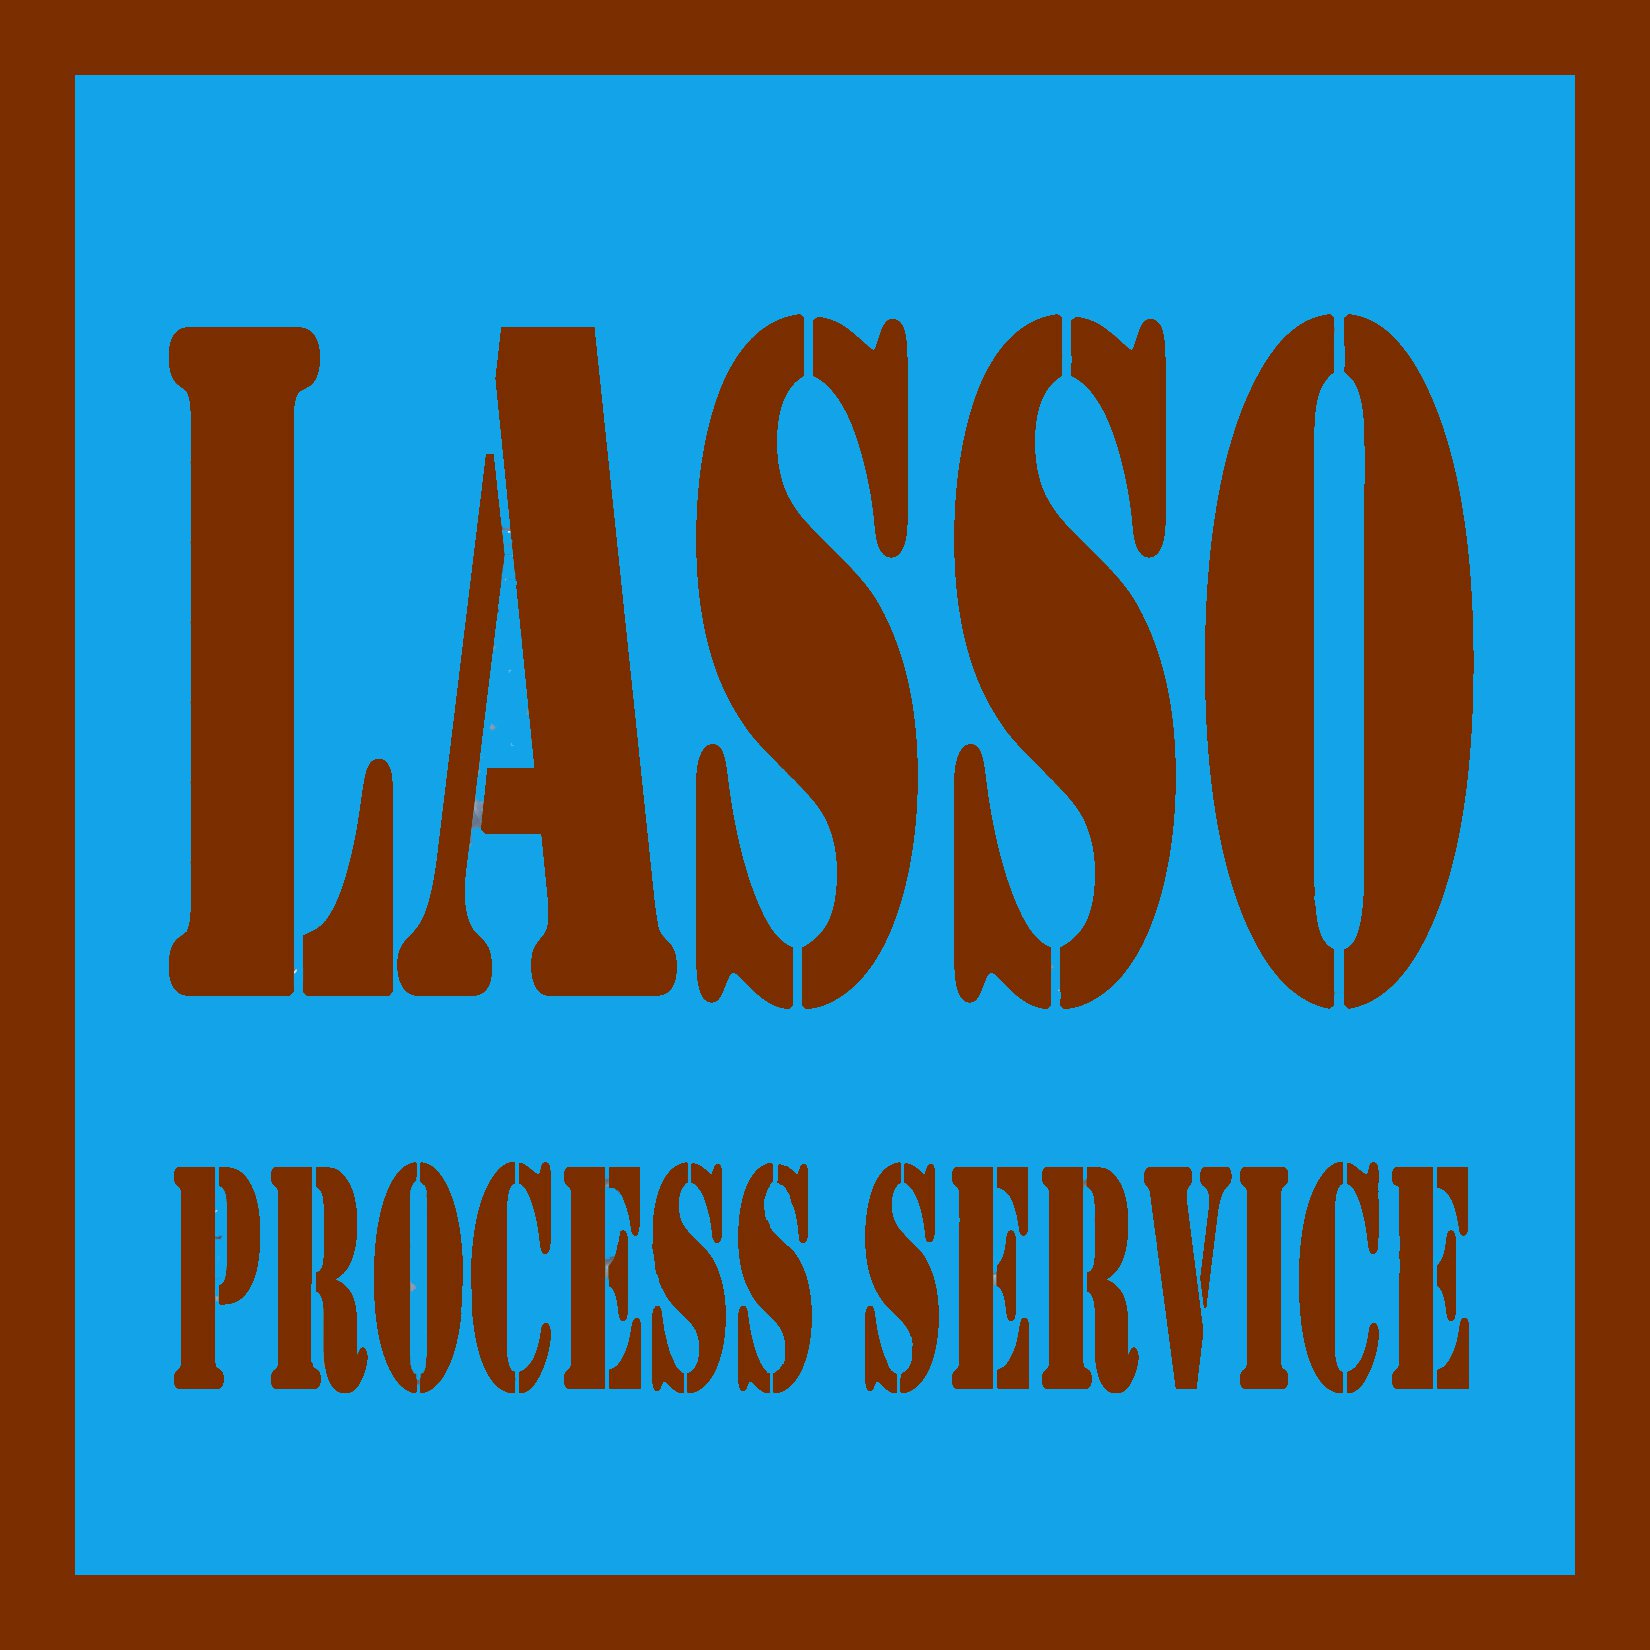 LASSO PROCESS SERVICE